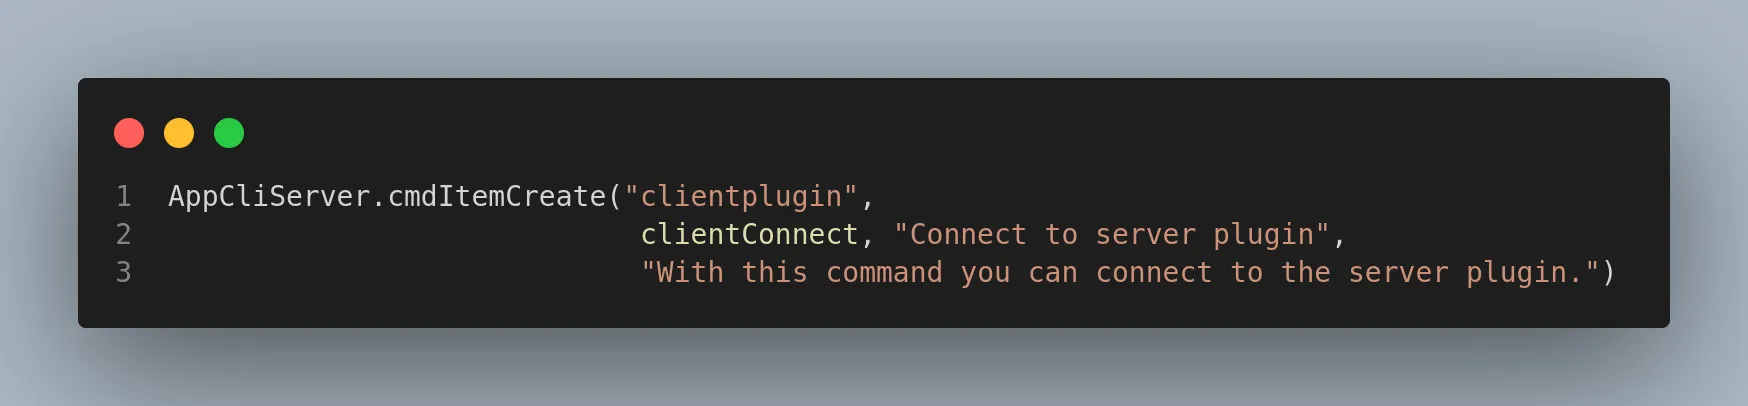 Command clientplugin calls function clientConnect().